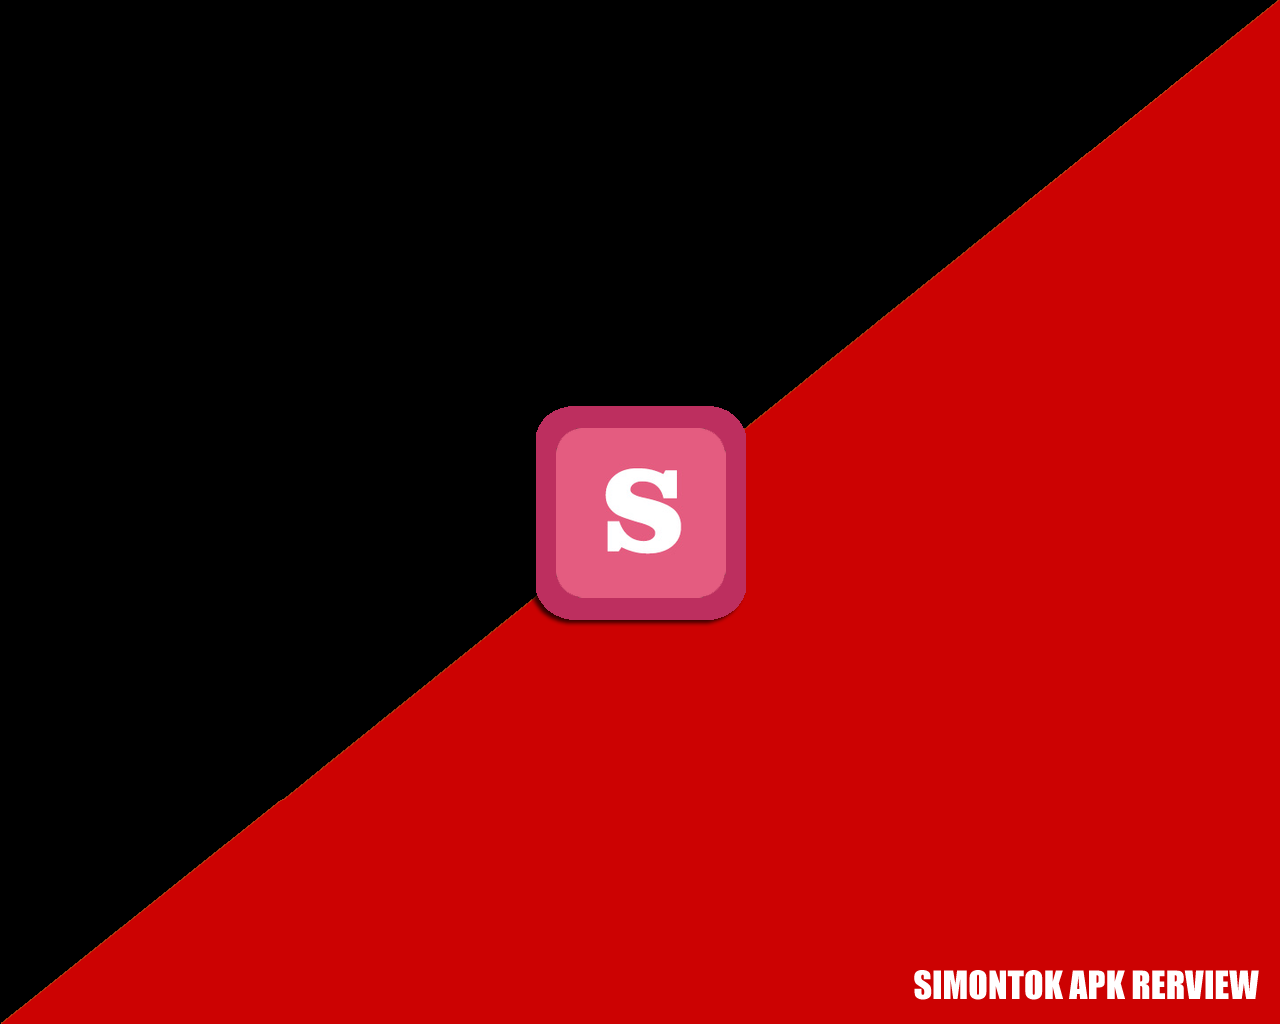 Simontox App 2020 Apk Download Latest Version 2.0 Jalantikus Terbaru - Simontox App 2020 Apk ...